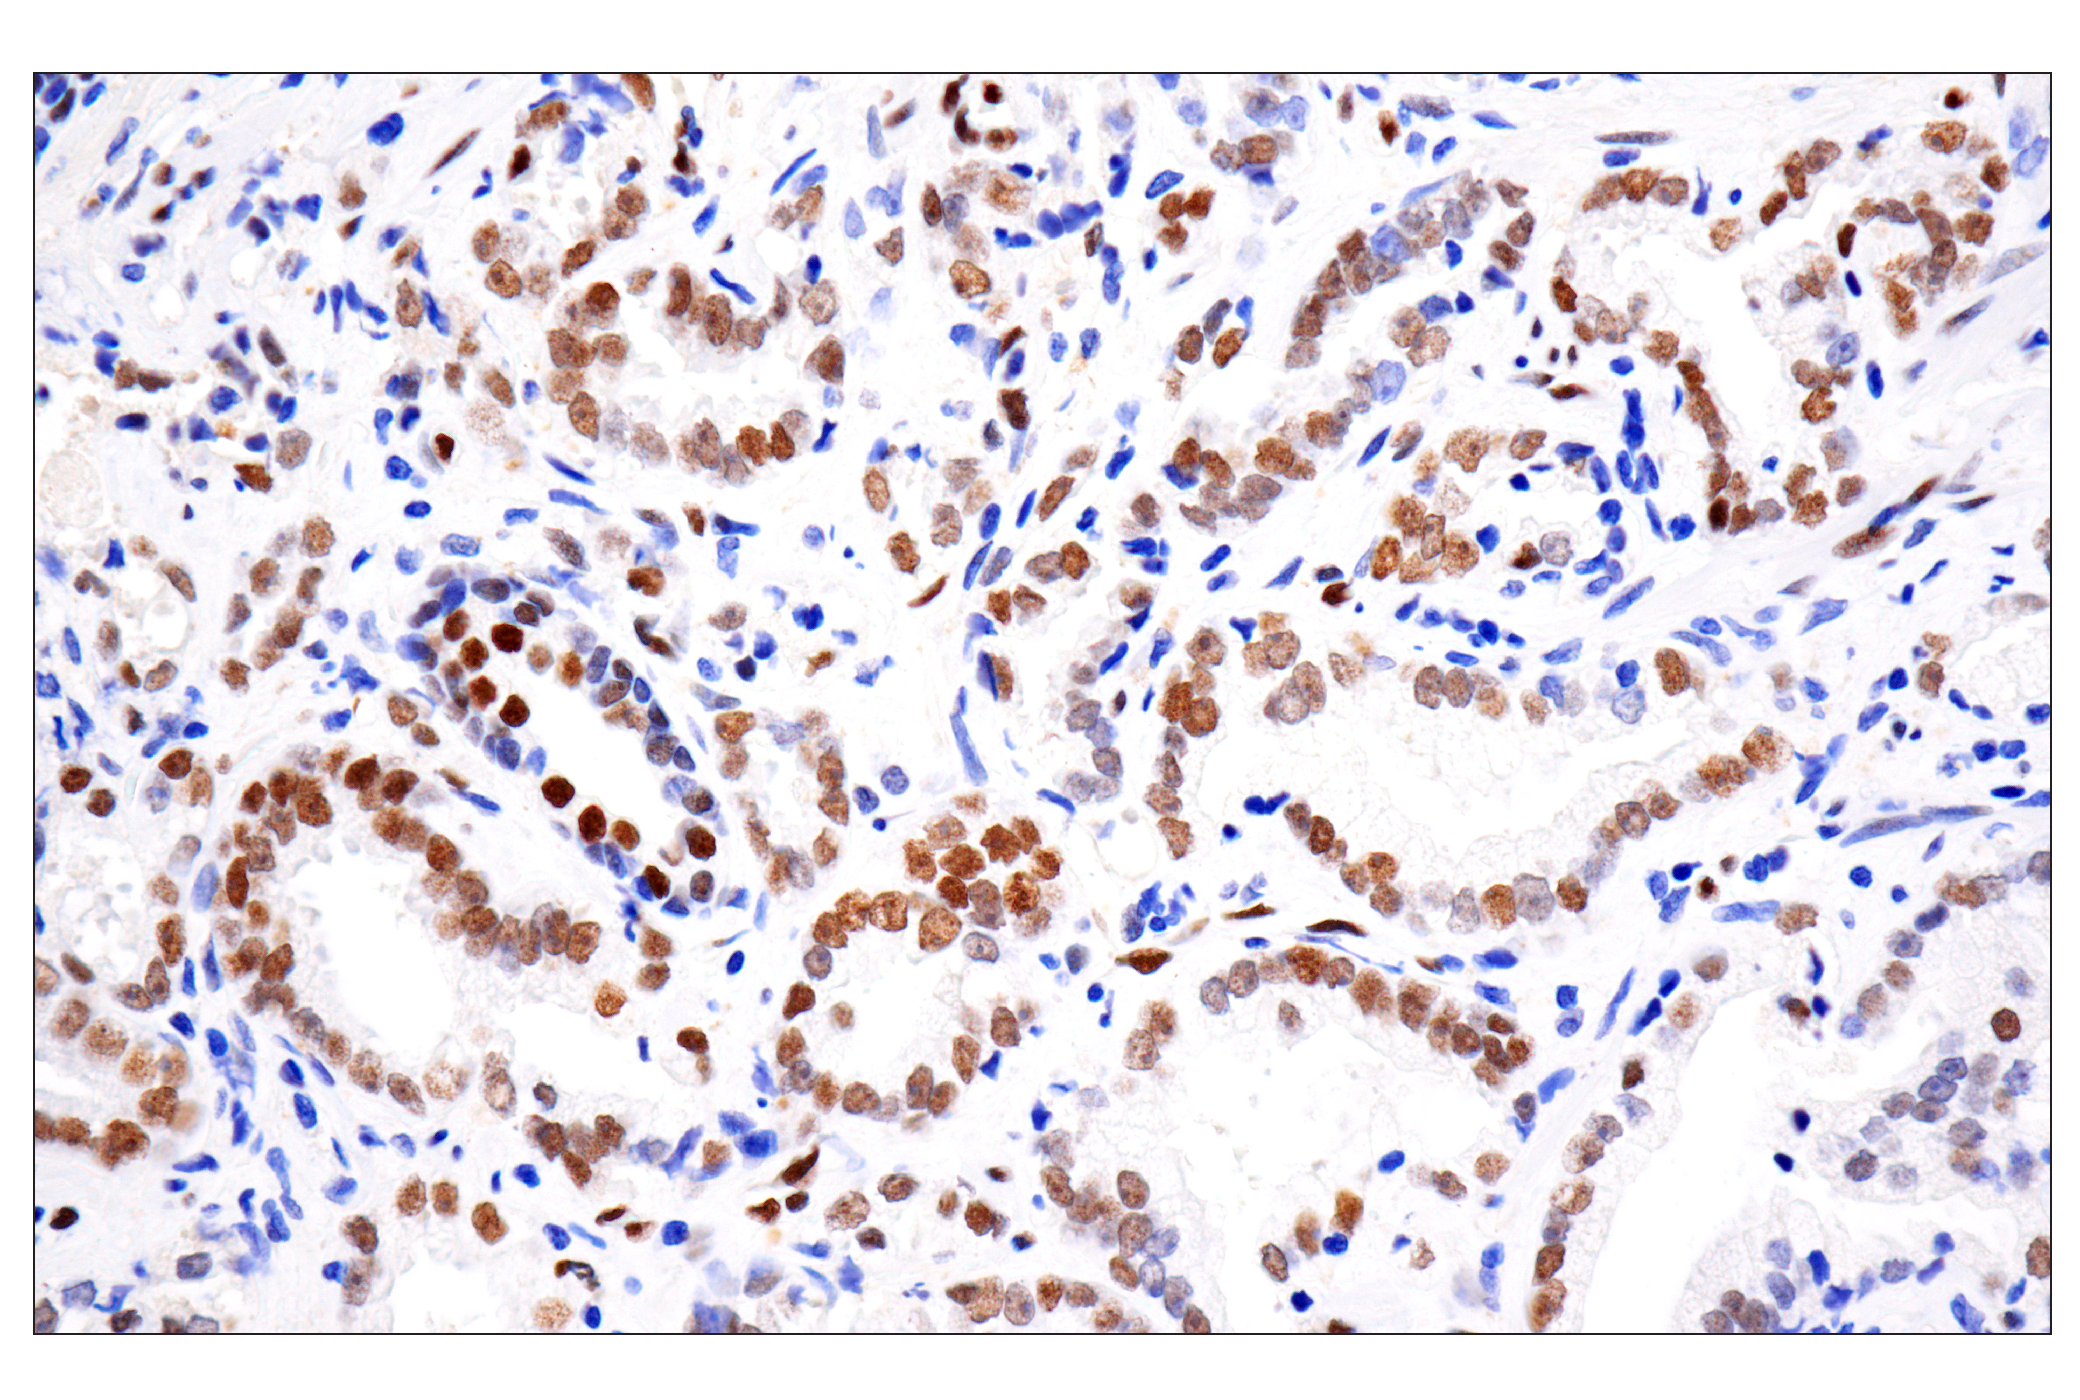  Image 8: PhosphoPlus® Stat3 (Tyr705) Antibody Duet